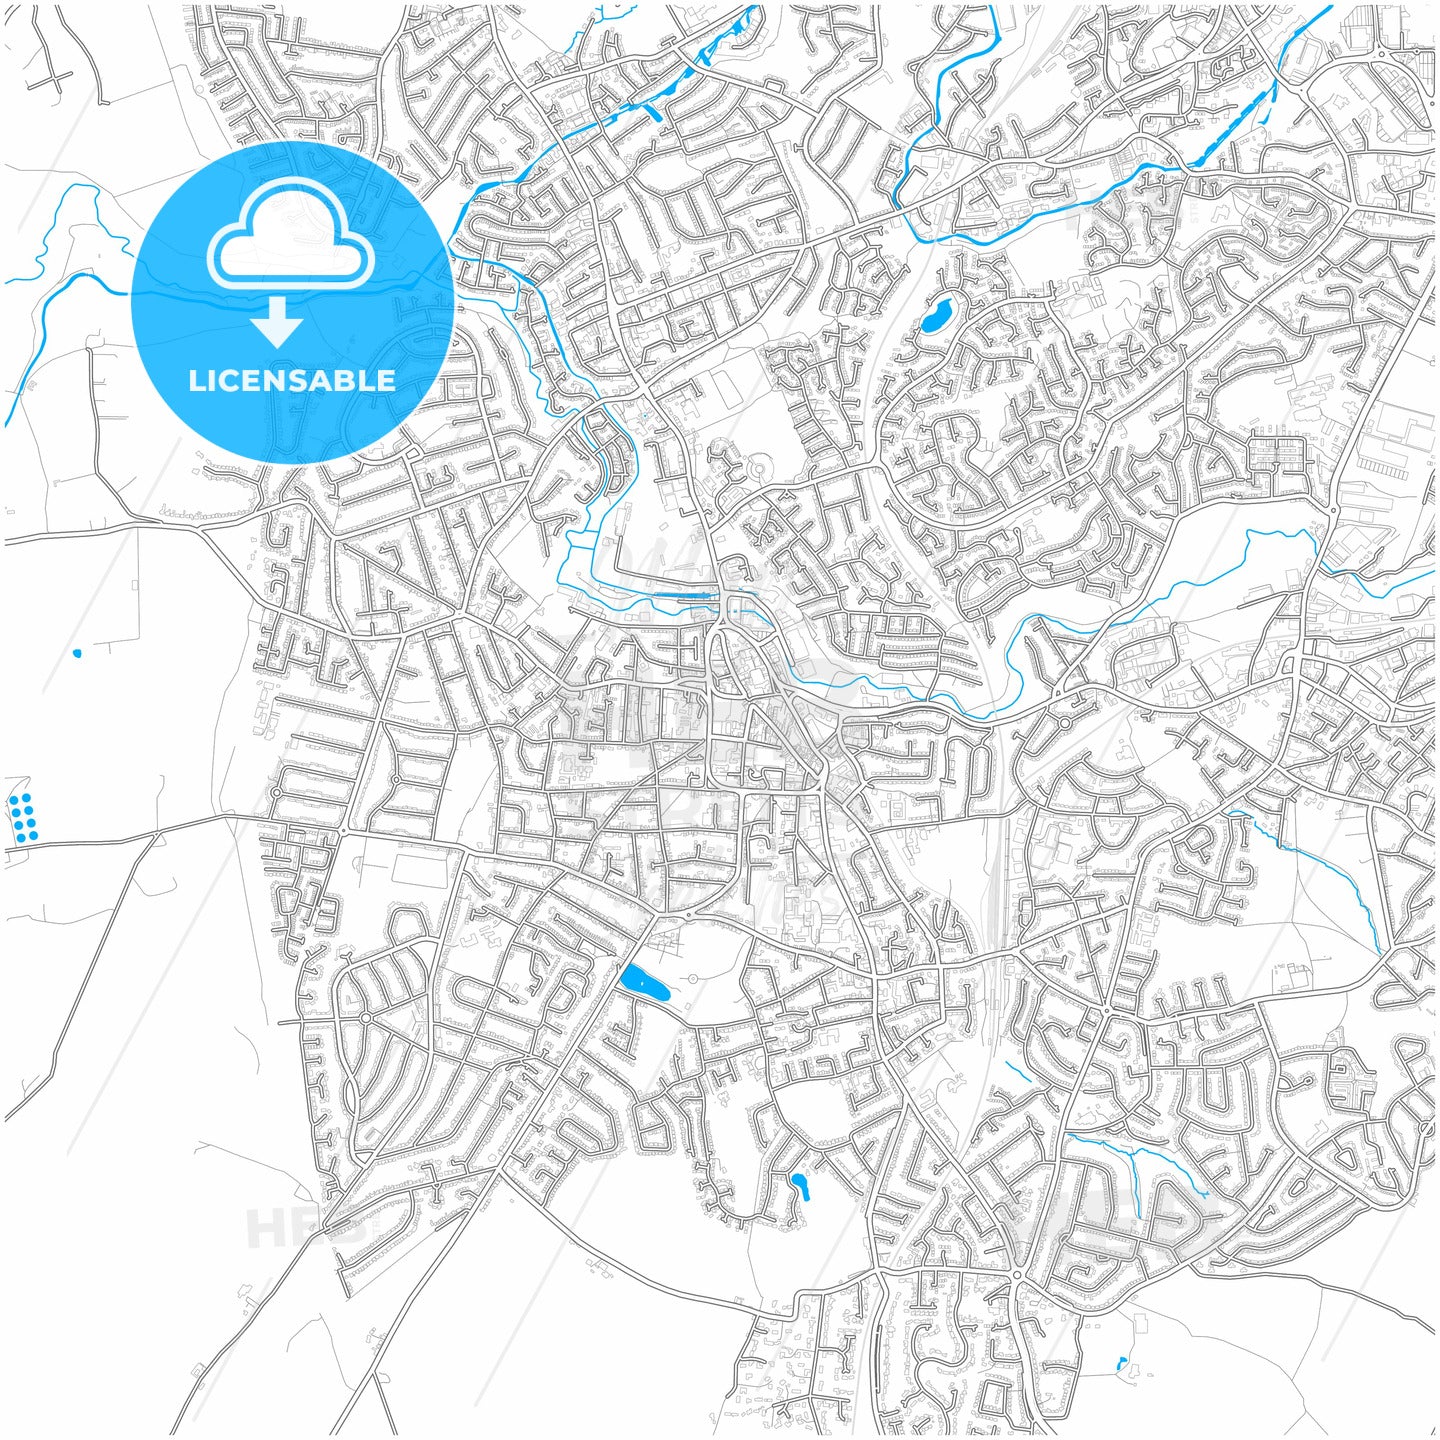 Stourbridge, West Midlands, England, city map with high quality roads.